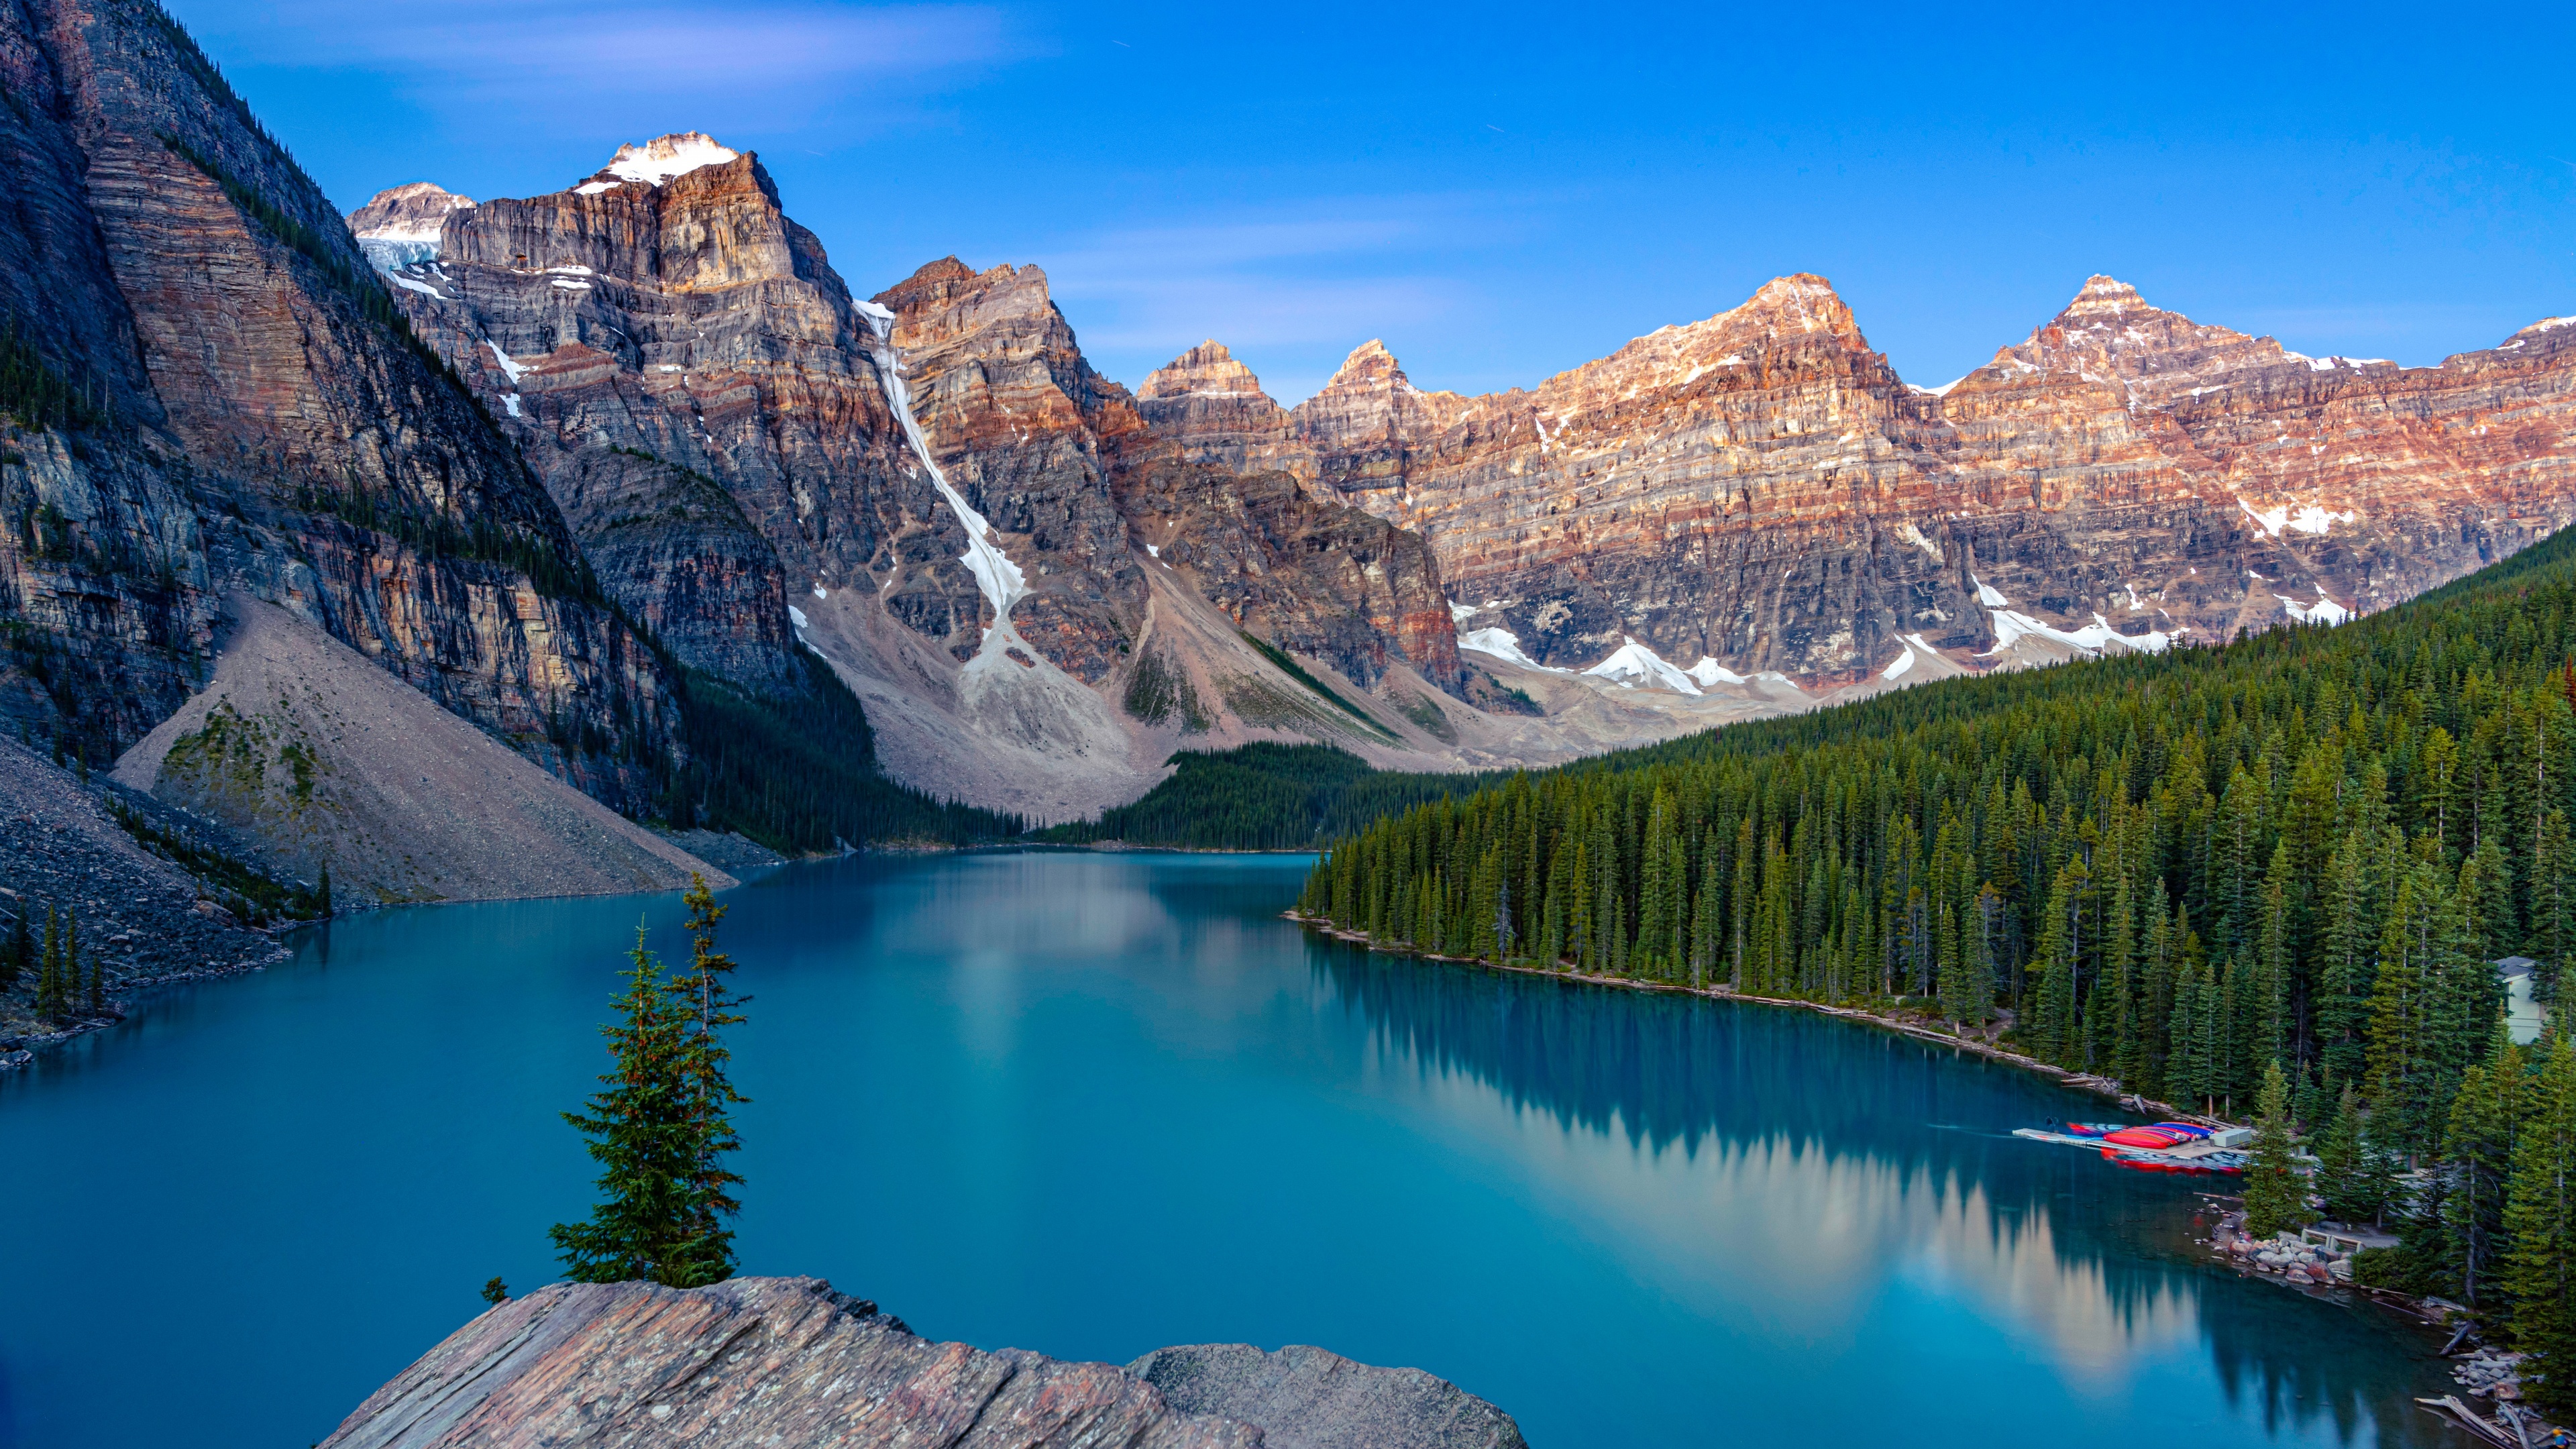 Moraine Lake, Turquoise water, Valley of the Ten Peaks, Serene nature, 3840x2160 4K Desktop